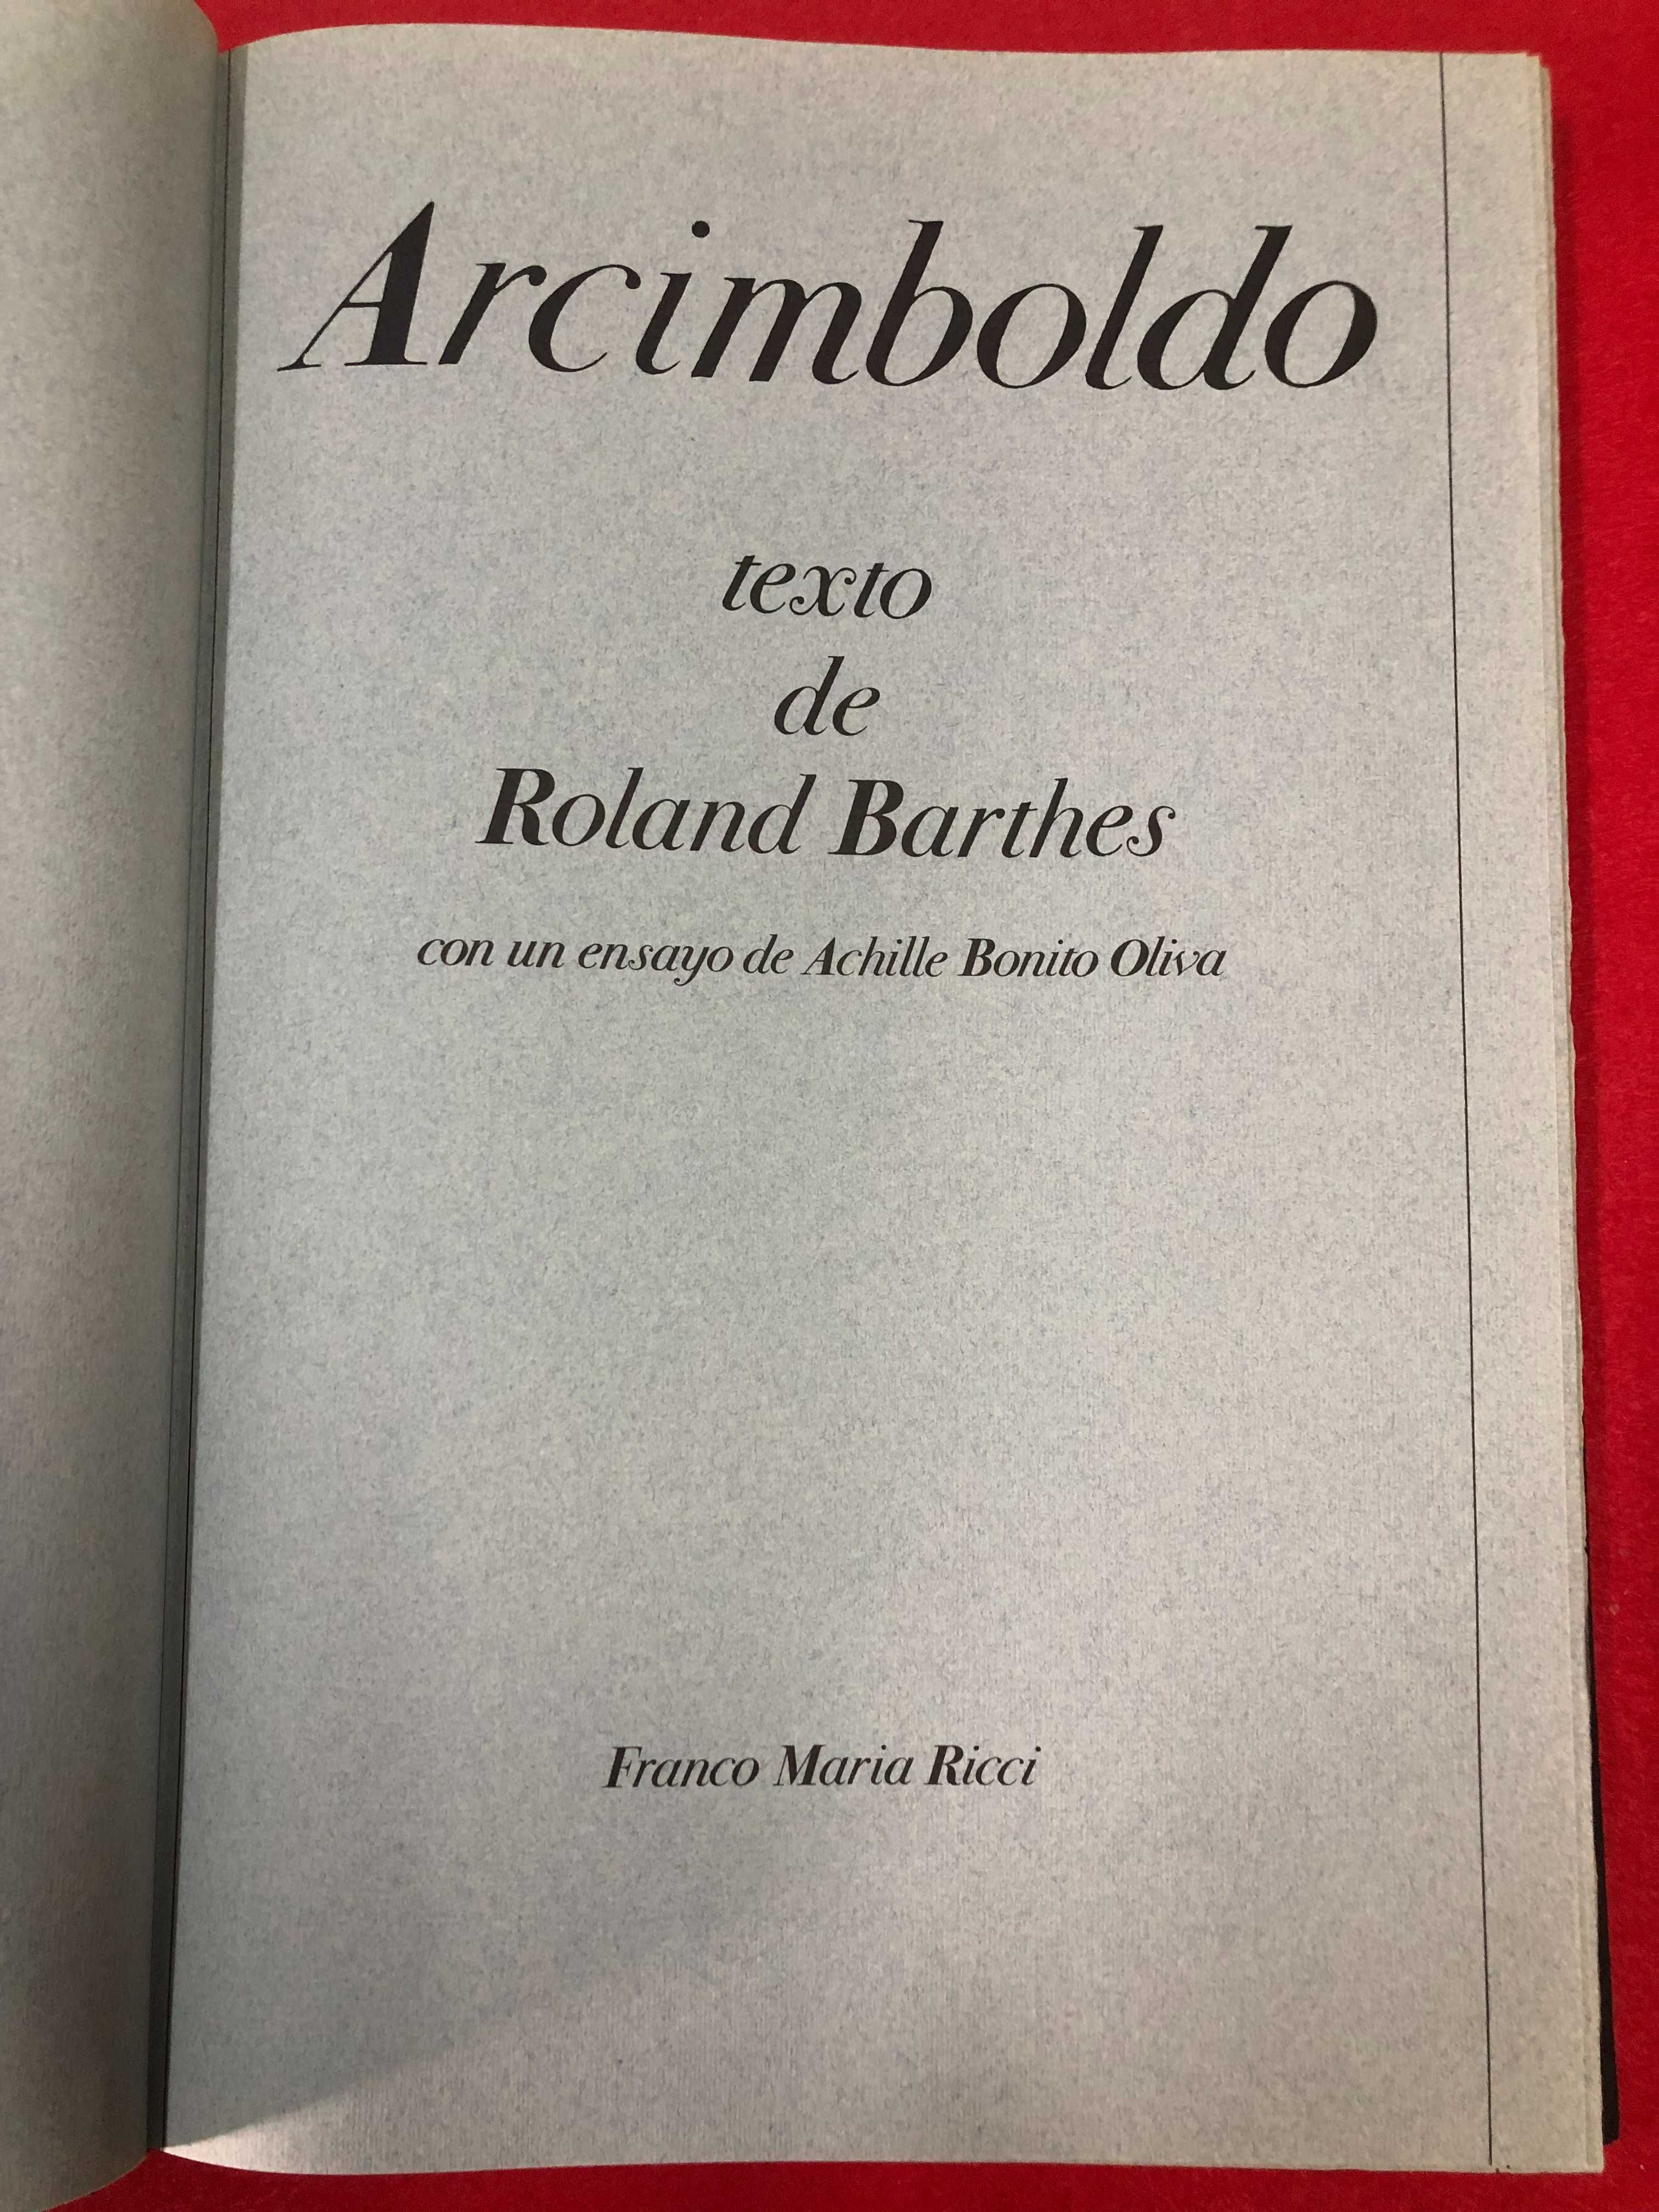 Arcimboldo - Roland Barthes - Franco Maria Ricci